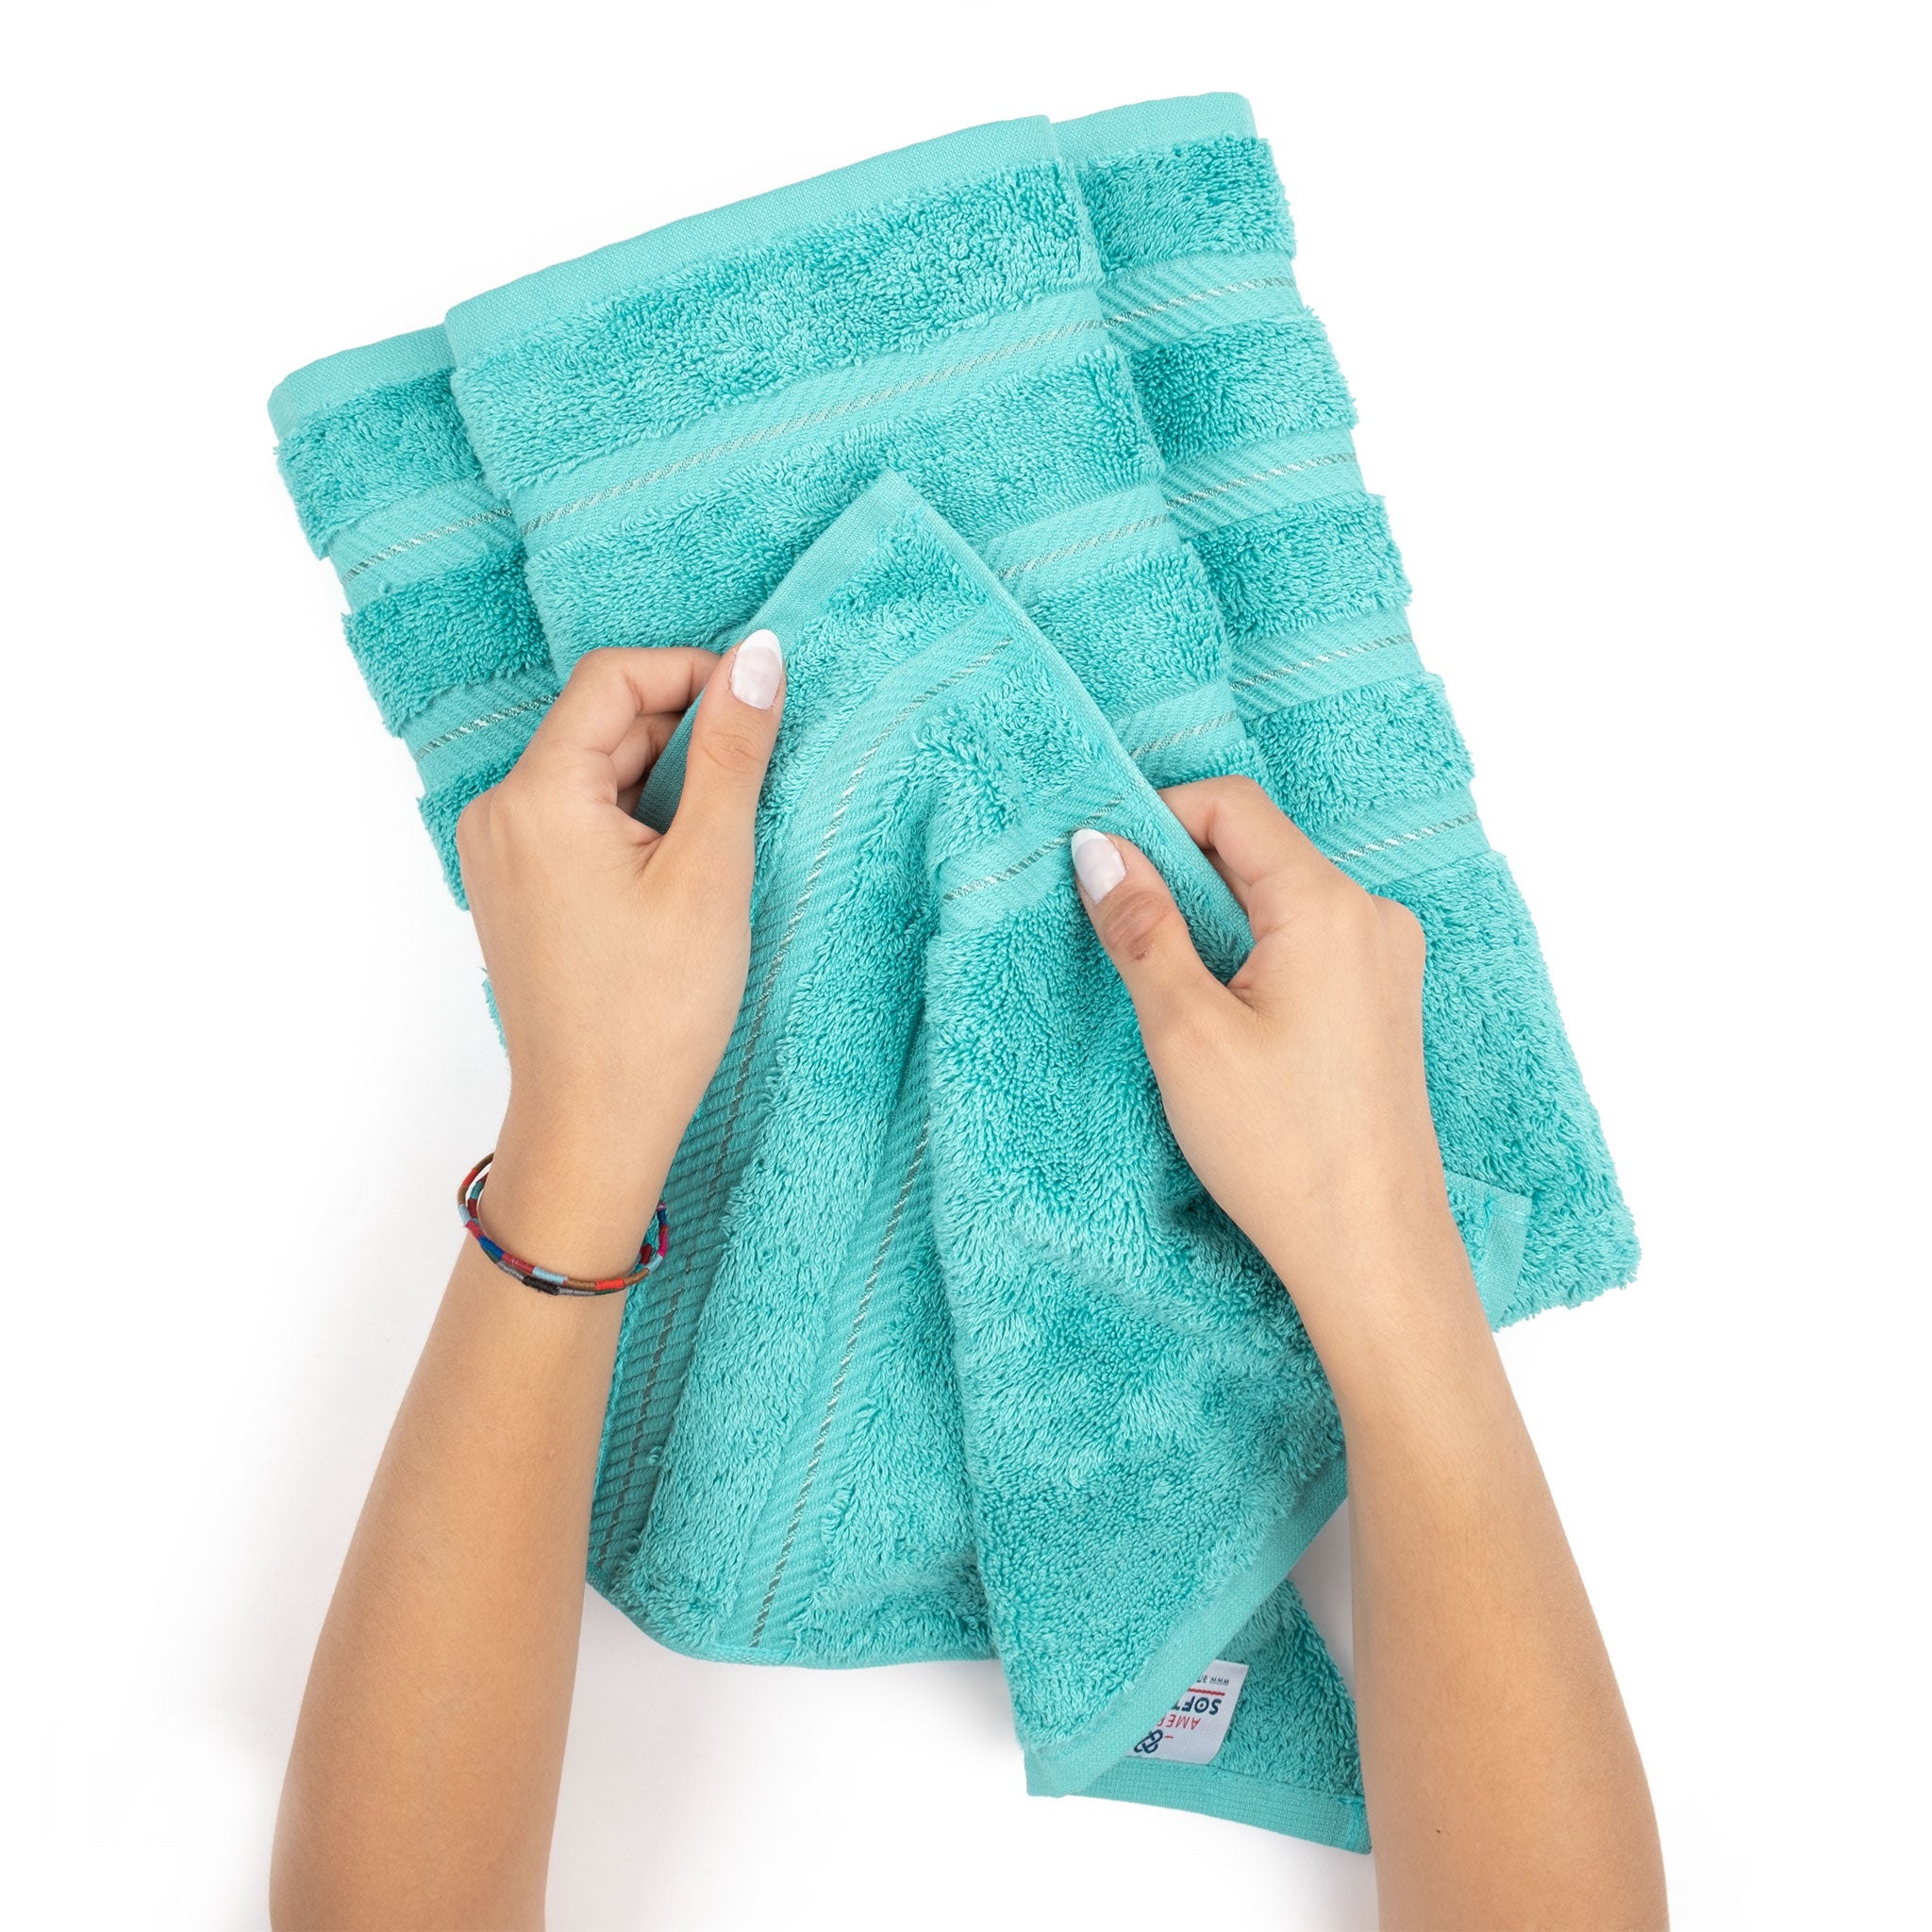 American Soft Linen - 35x70 Jumbo Bath Sheet Turkish Bath Towel - 16 Piece Case Pack - Turquoise-Blue - 4